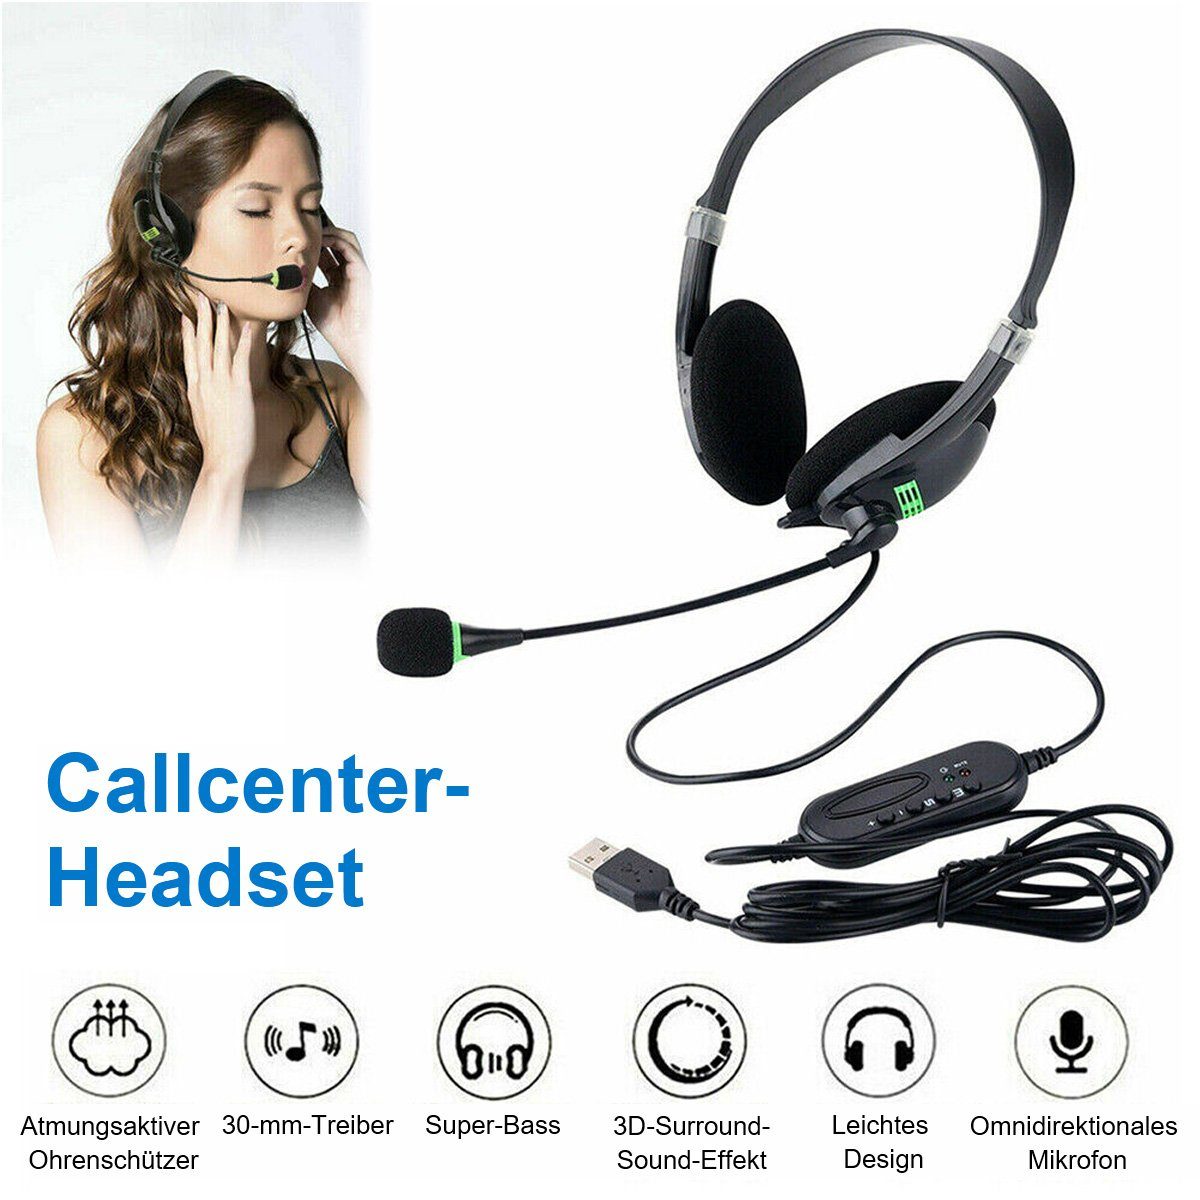 yozhiqu Computer-USB-Schnittstellen-Headset Headset-Headset Büro-Headset On-Ear-Kopfhörer (Kundendiensttelefon mit Mikrofon-Airline-Headset)